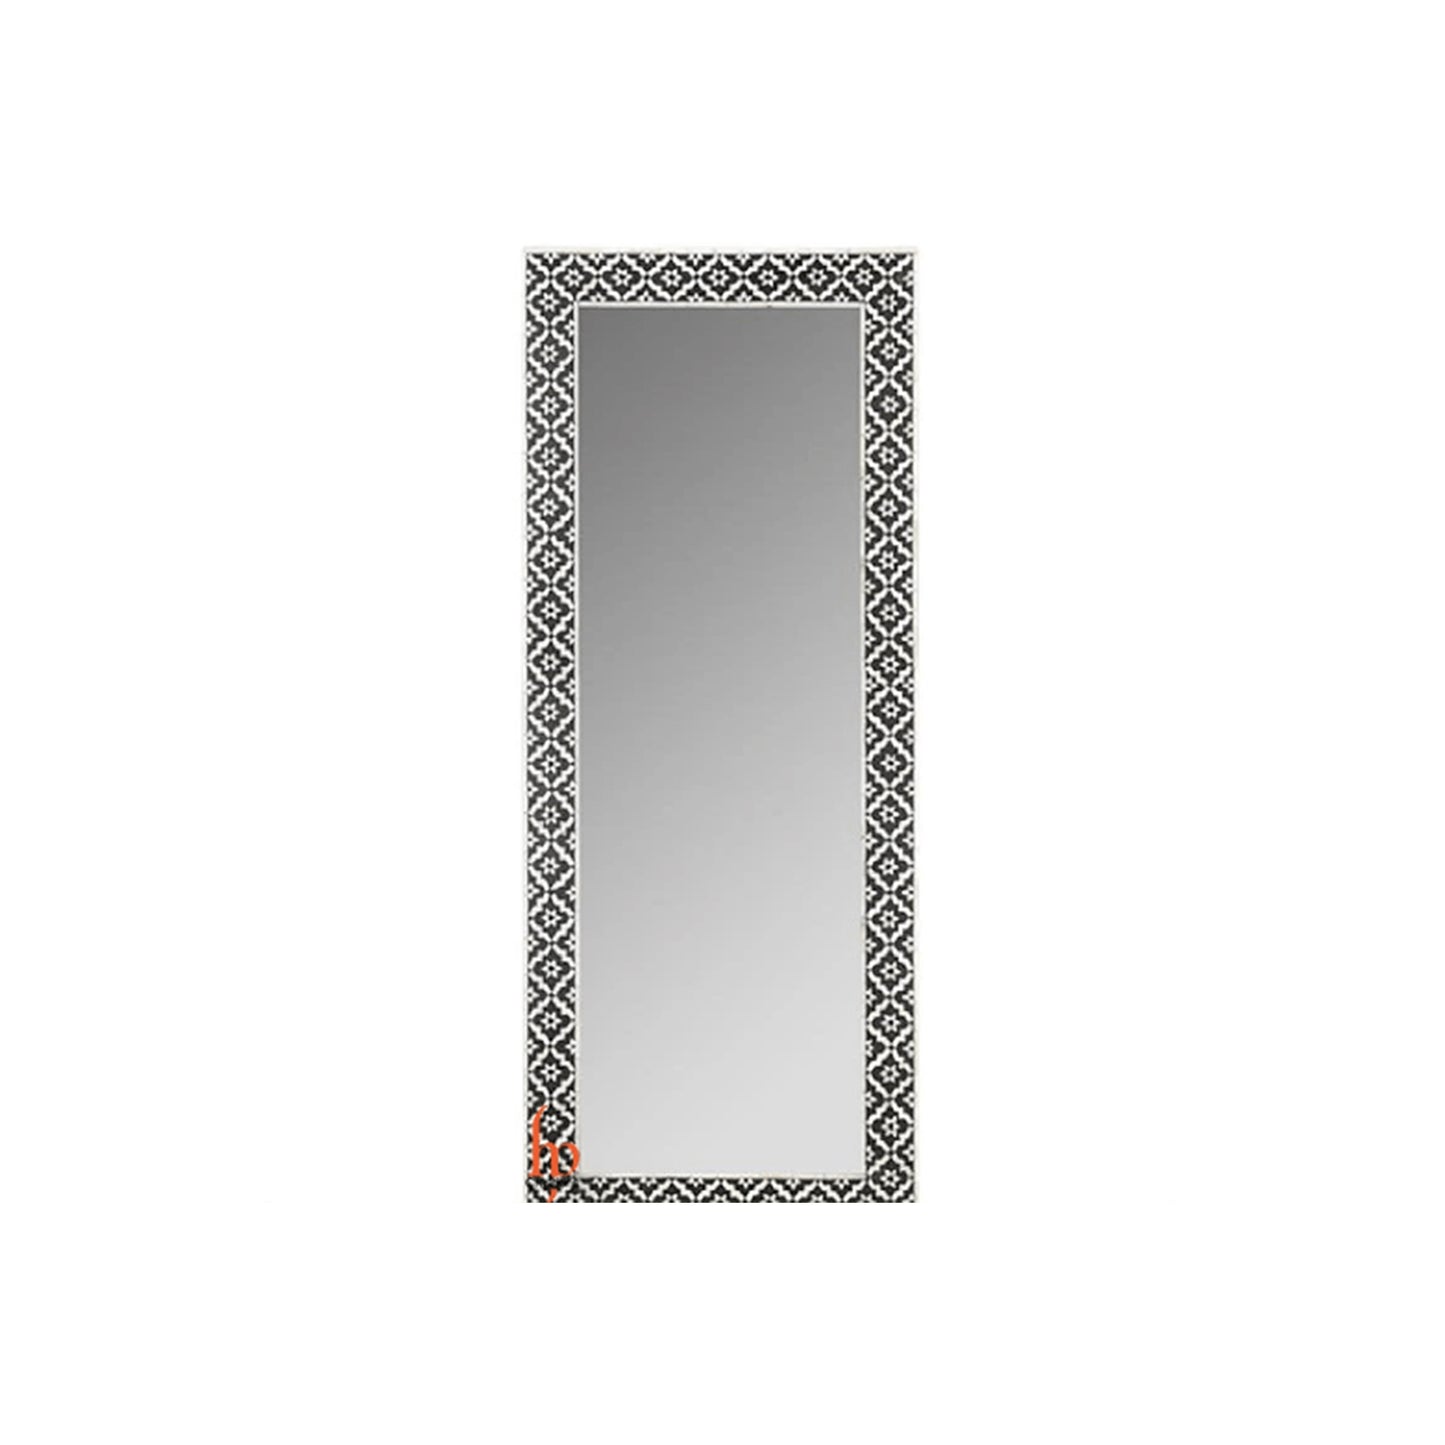 Handmade Bone Inlay Slim Rectangle Mirror Frame Beautiful Home Decor Mirror Frame Attractive Wall Mirror Bathroom Mirror